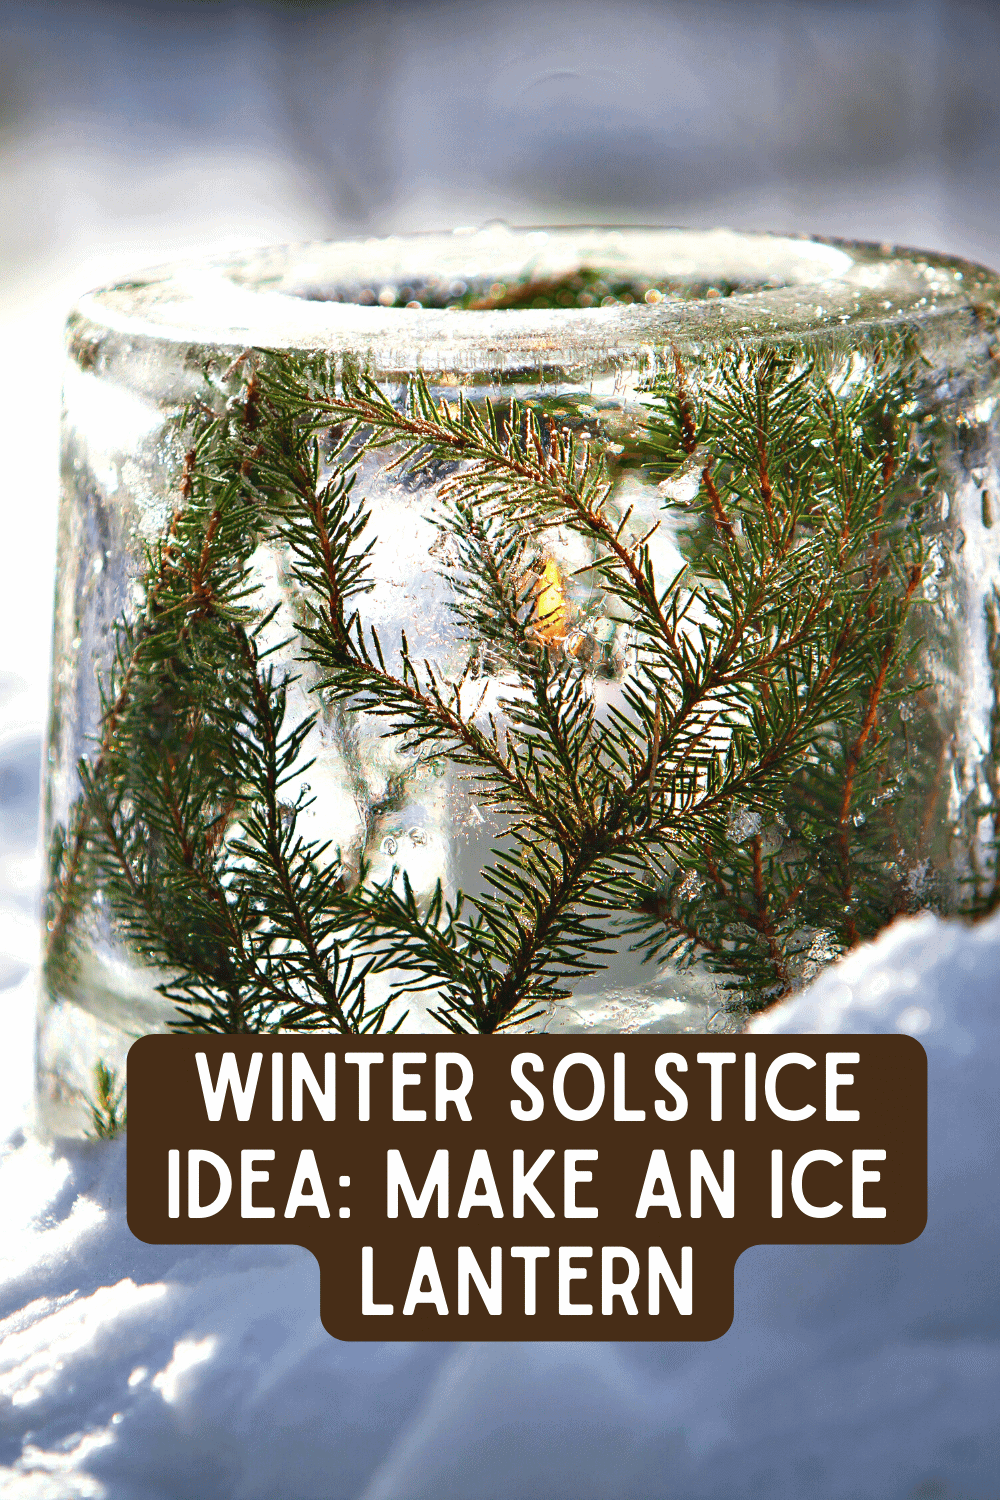 Winter Solstice Craft Projects Ideas - Winter Solstice Lantern Craft